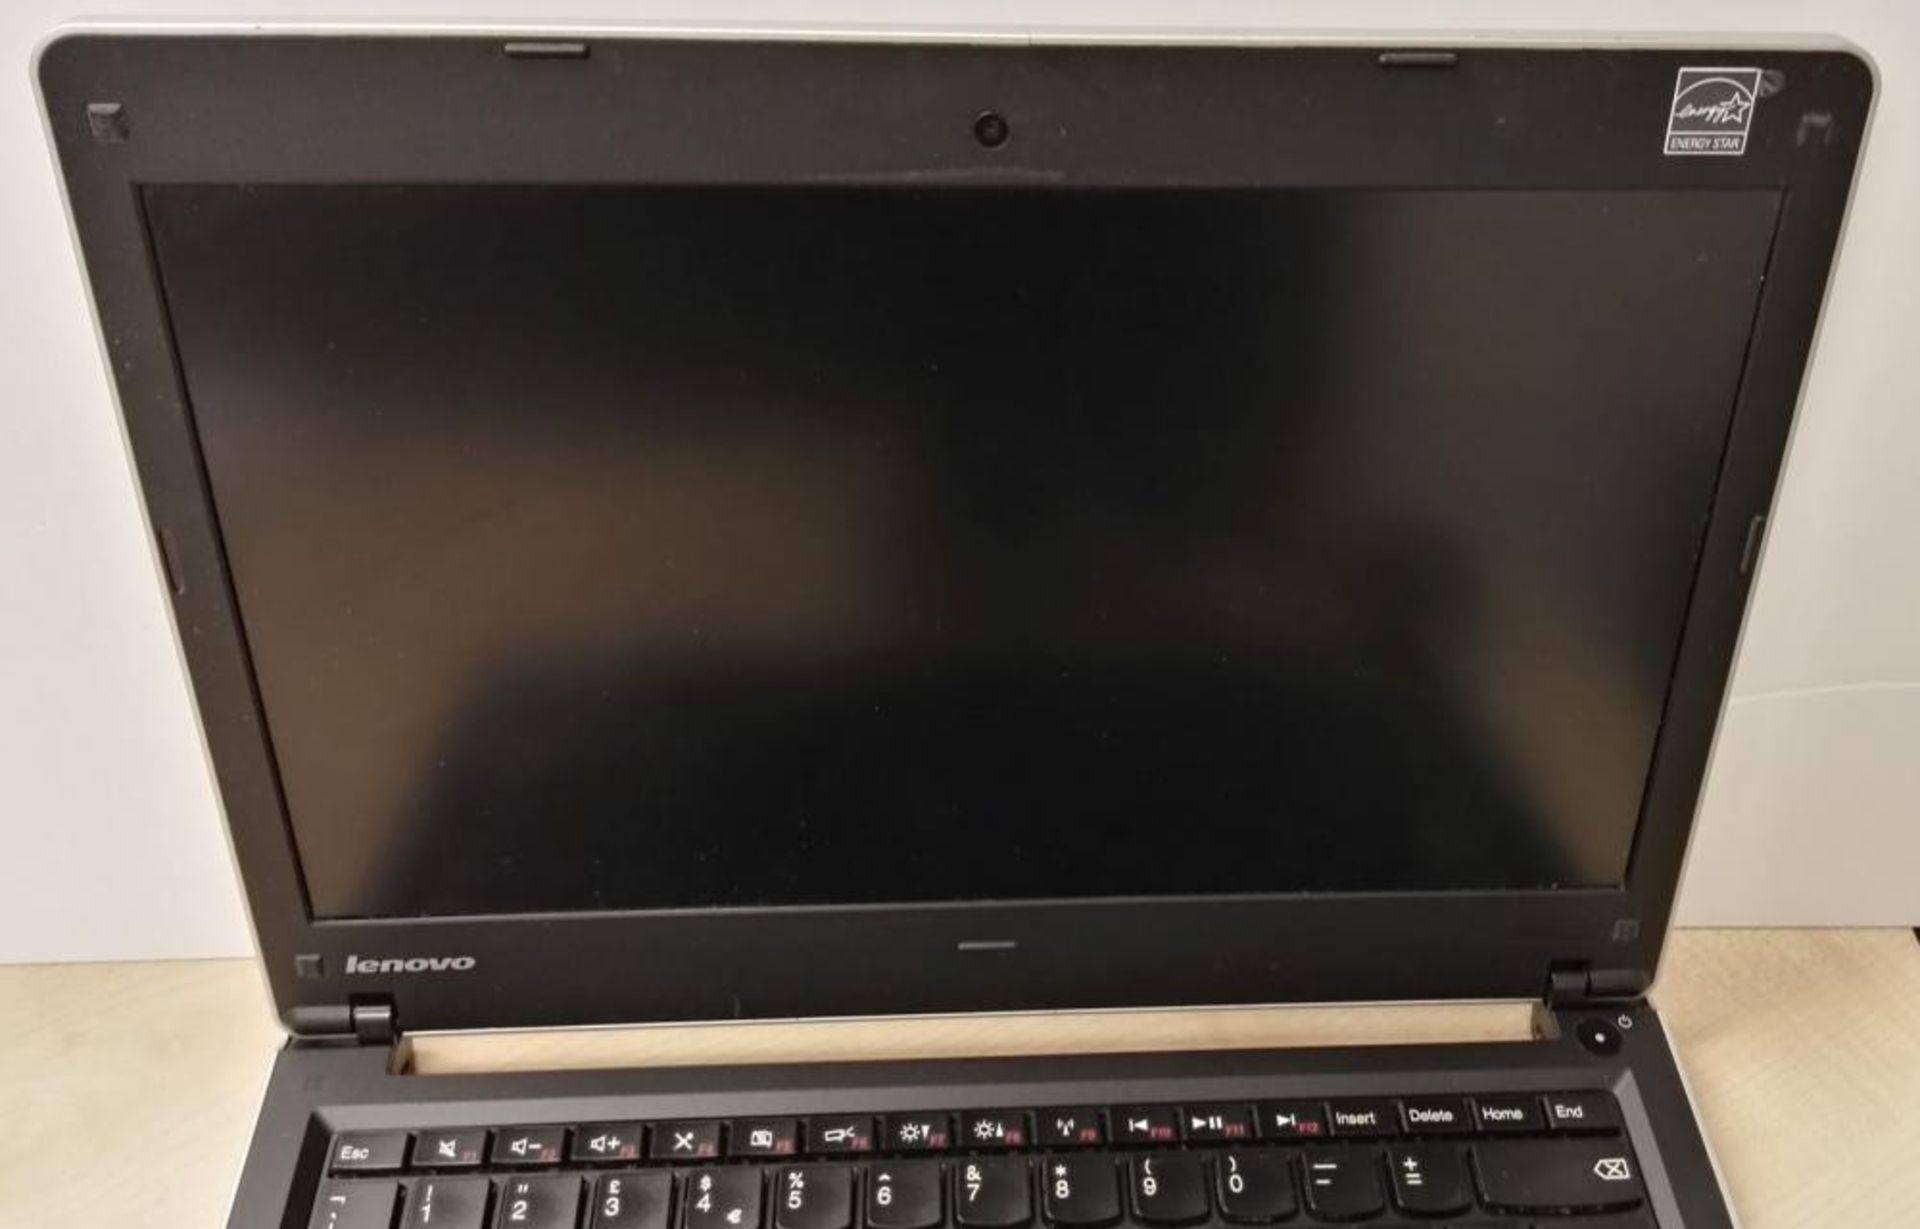 1 x Lenovo Thinkpad Edge 13 i3 Laptop Computer - Features a 13.3 Inch Screen, Intel i3-380U 1330MHz - Image 5 of 9